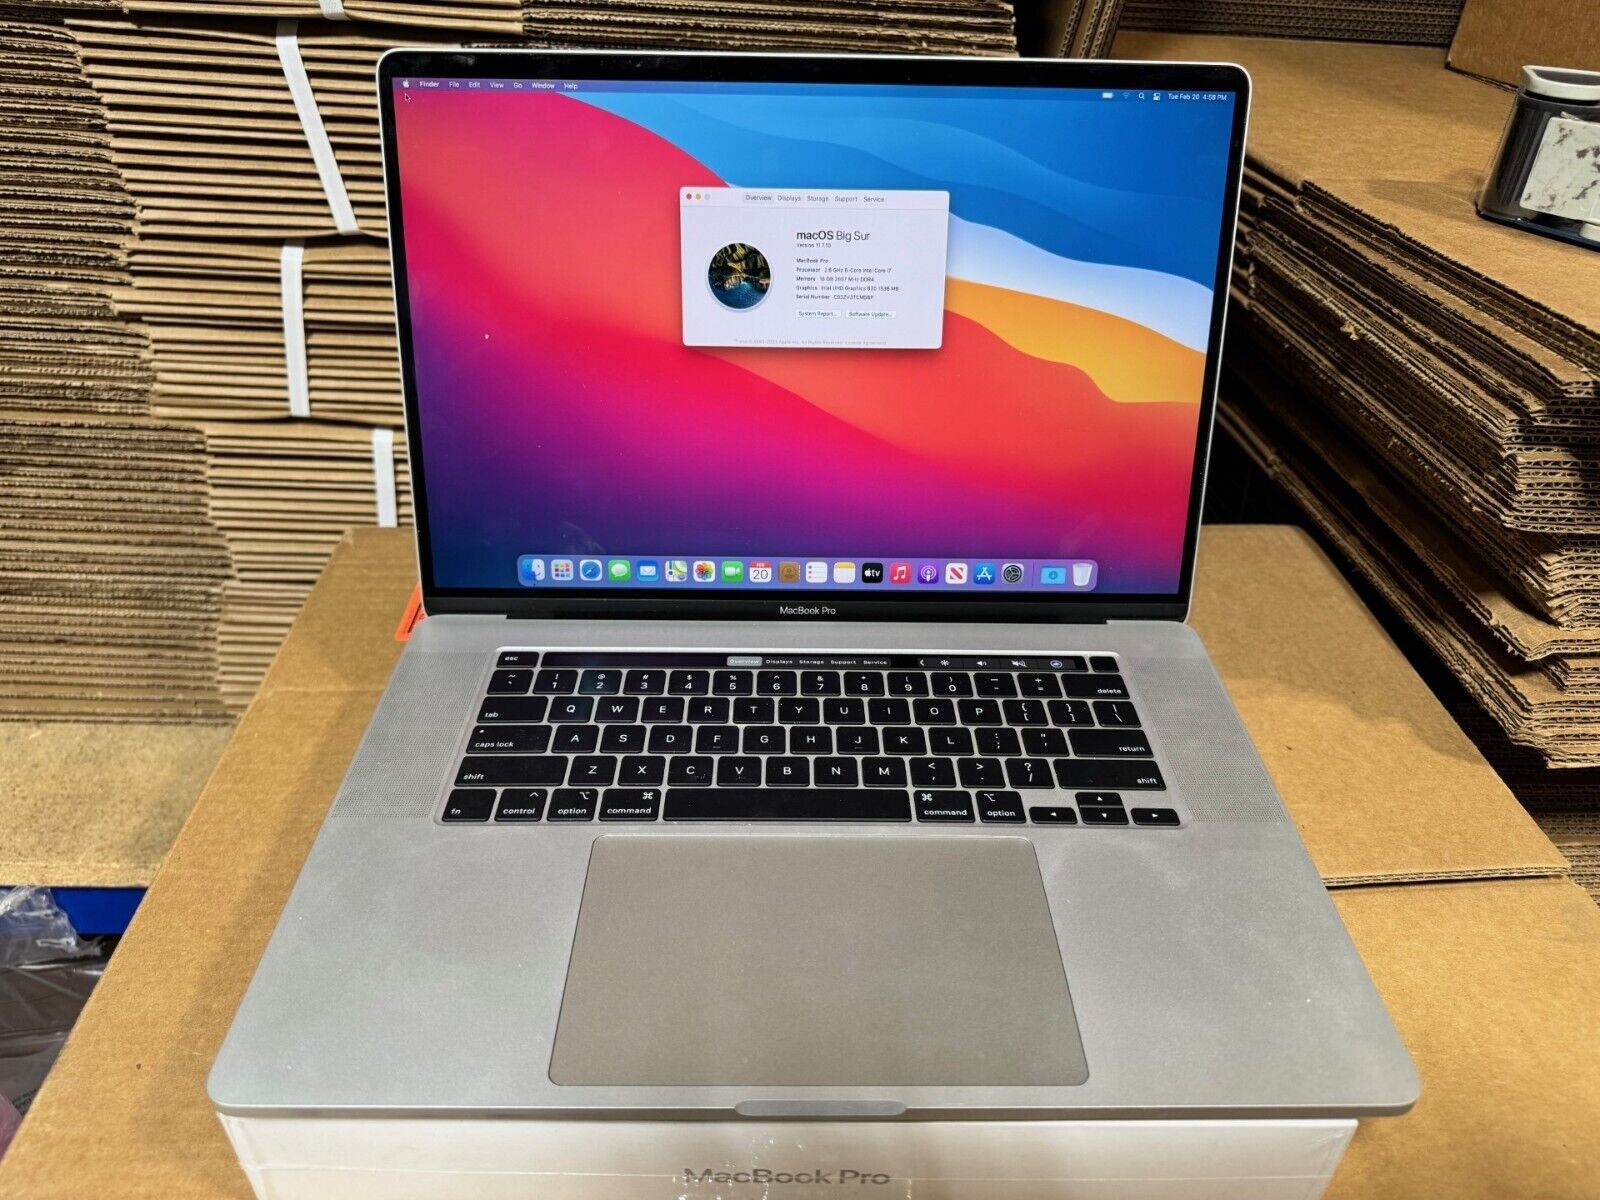 Macbook Pro 2019 16" I7-9750H@2.60GHz 16GB